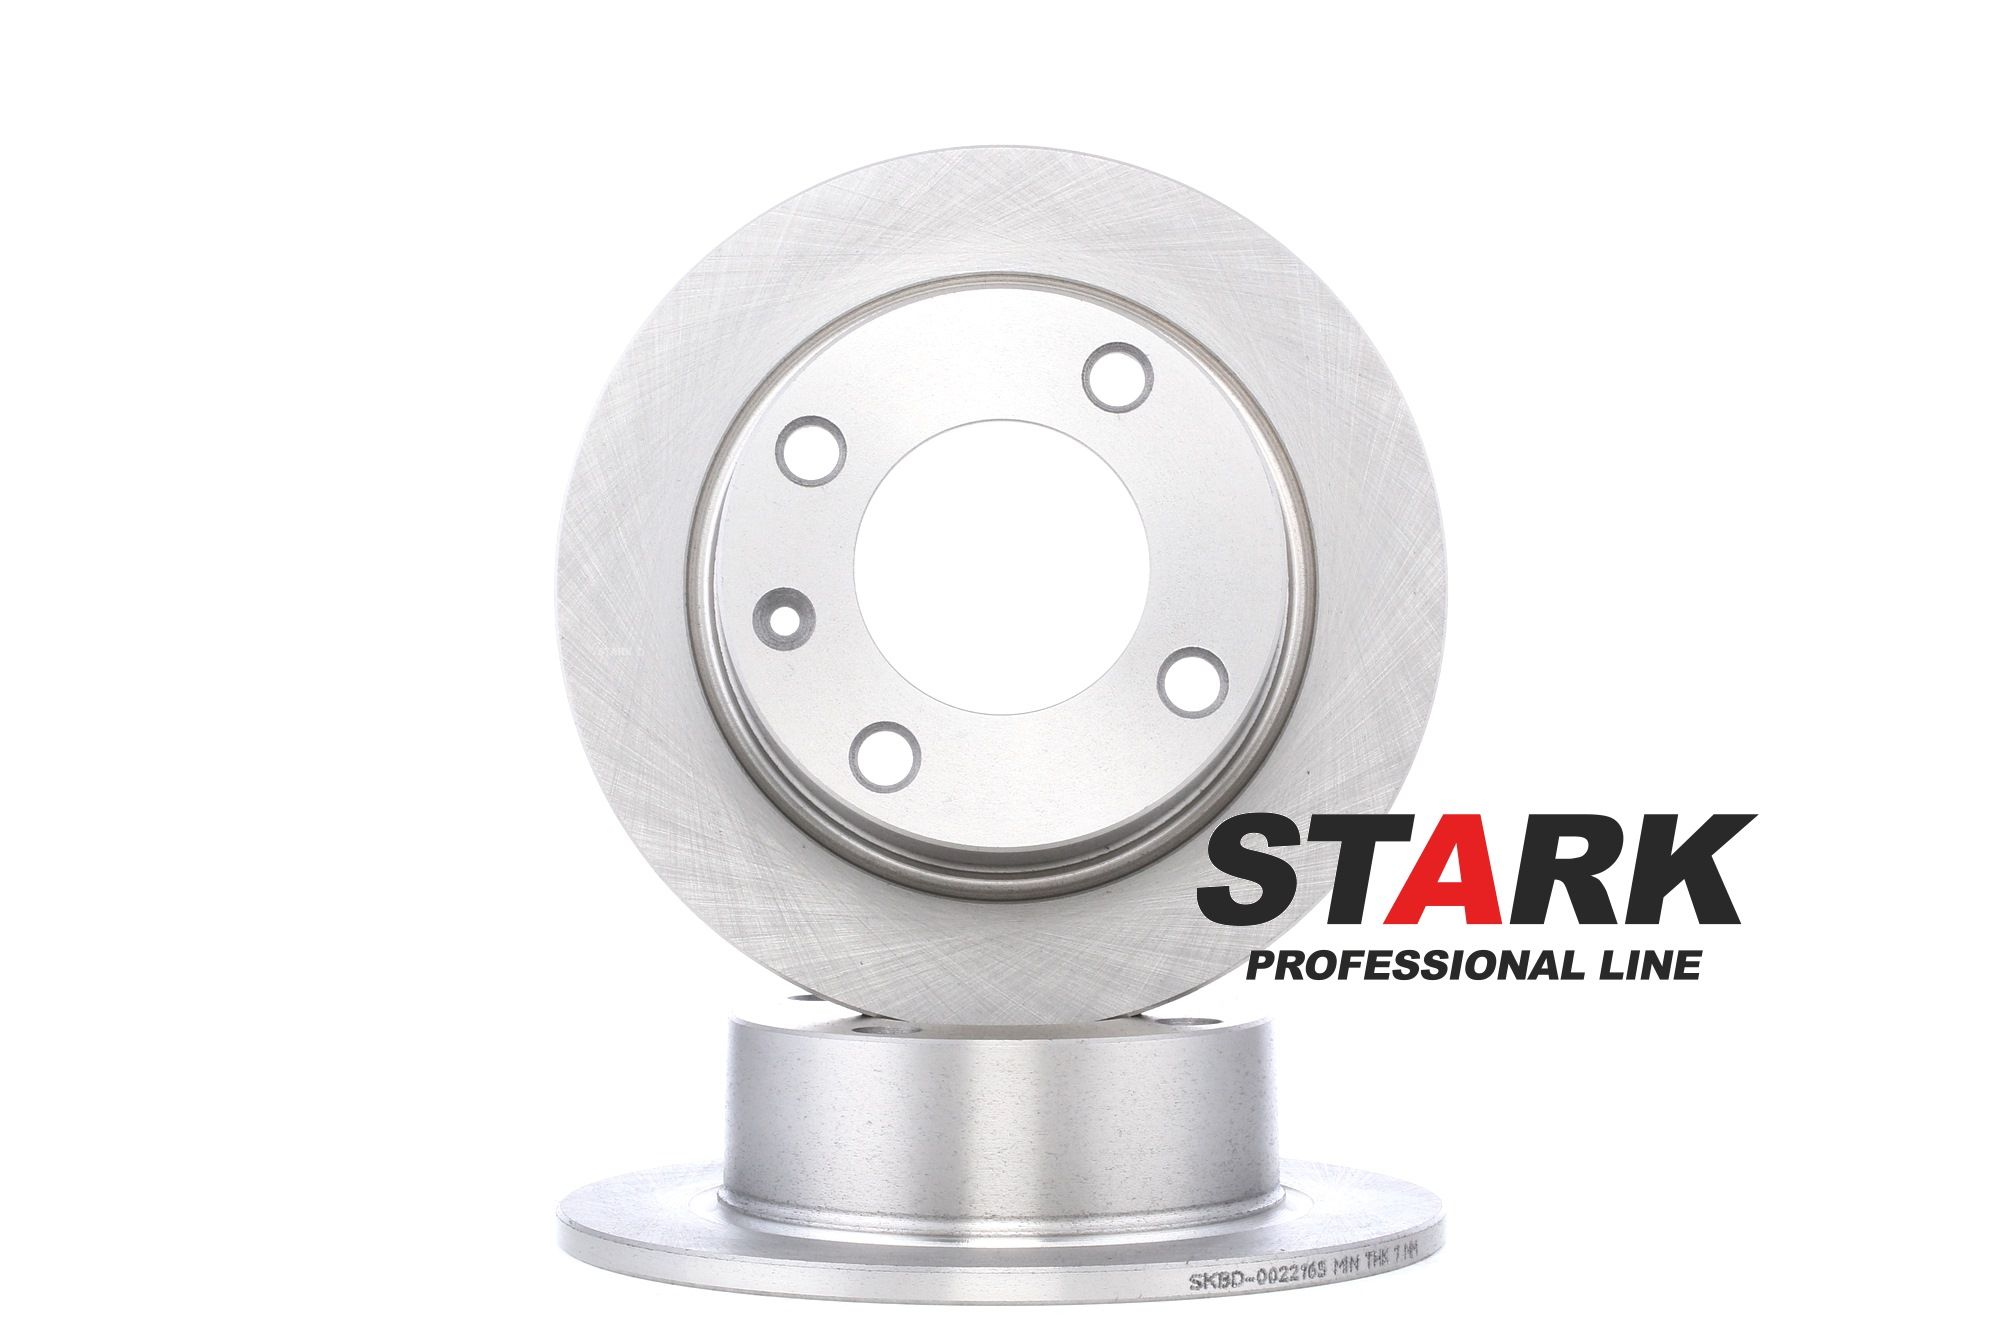 STARK SKBD-0022165 Brake disc Rear Axle, 224x9mm, 4/5x108,0, solid